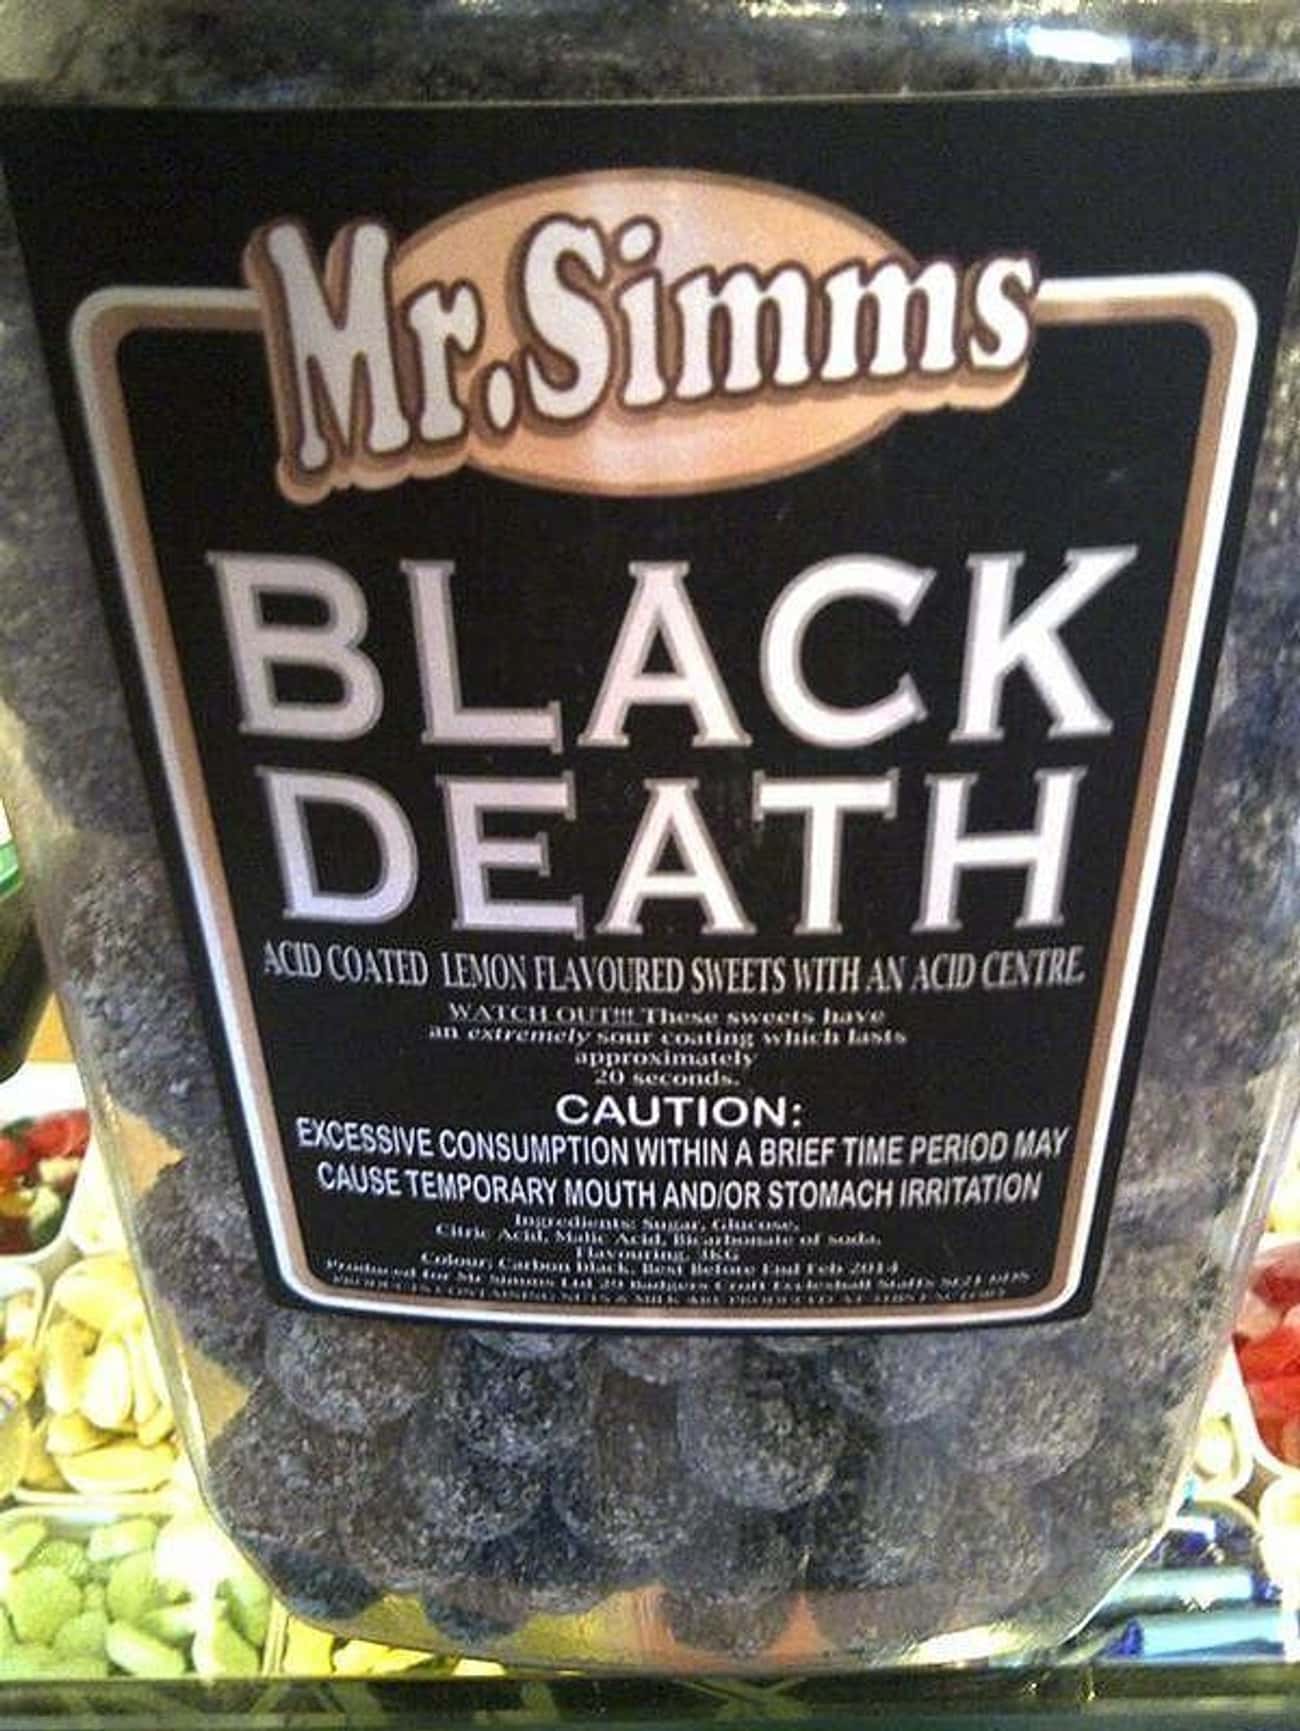 Black Death 